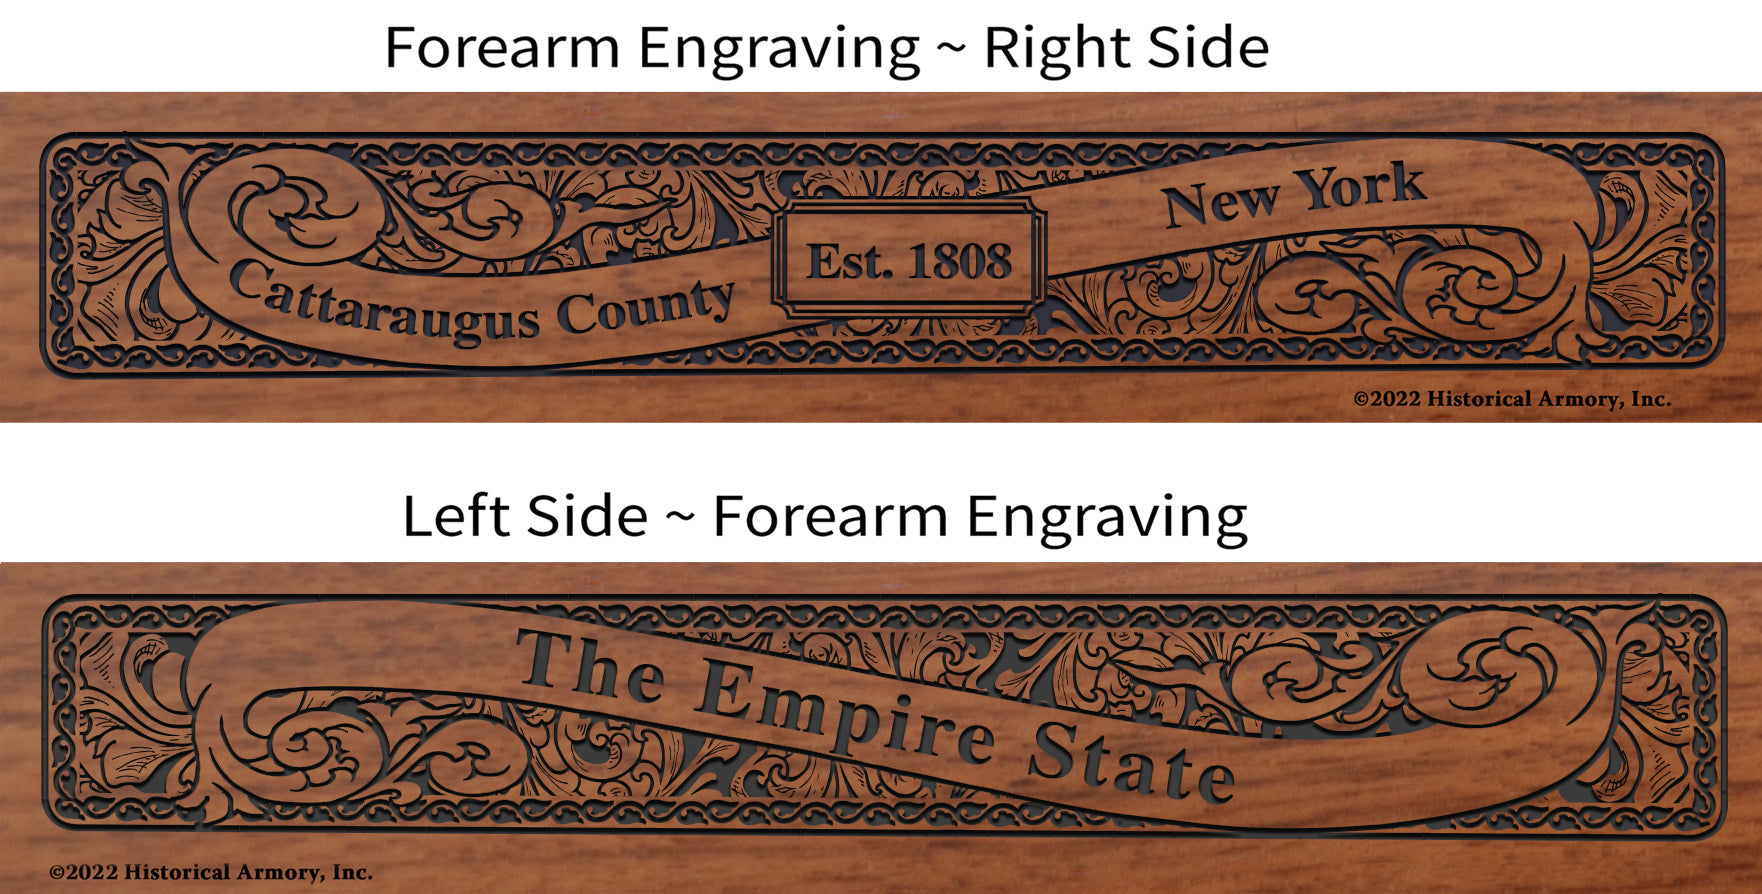 Cattaraugus County New York Engraved Rifle Forearm